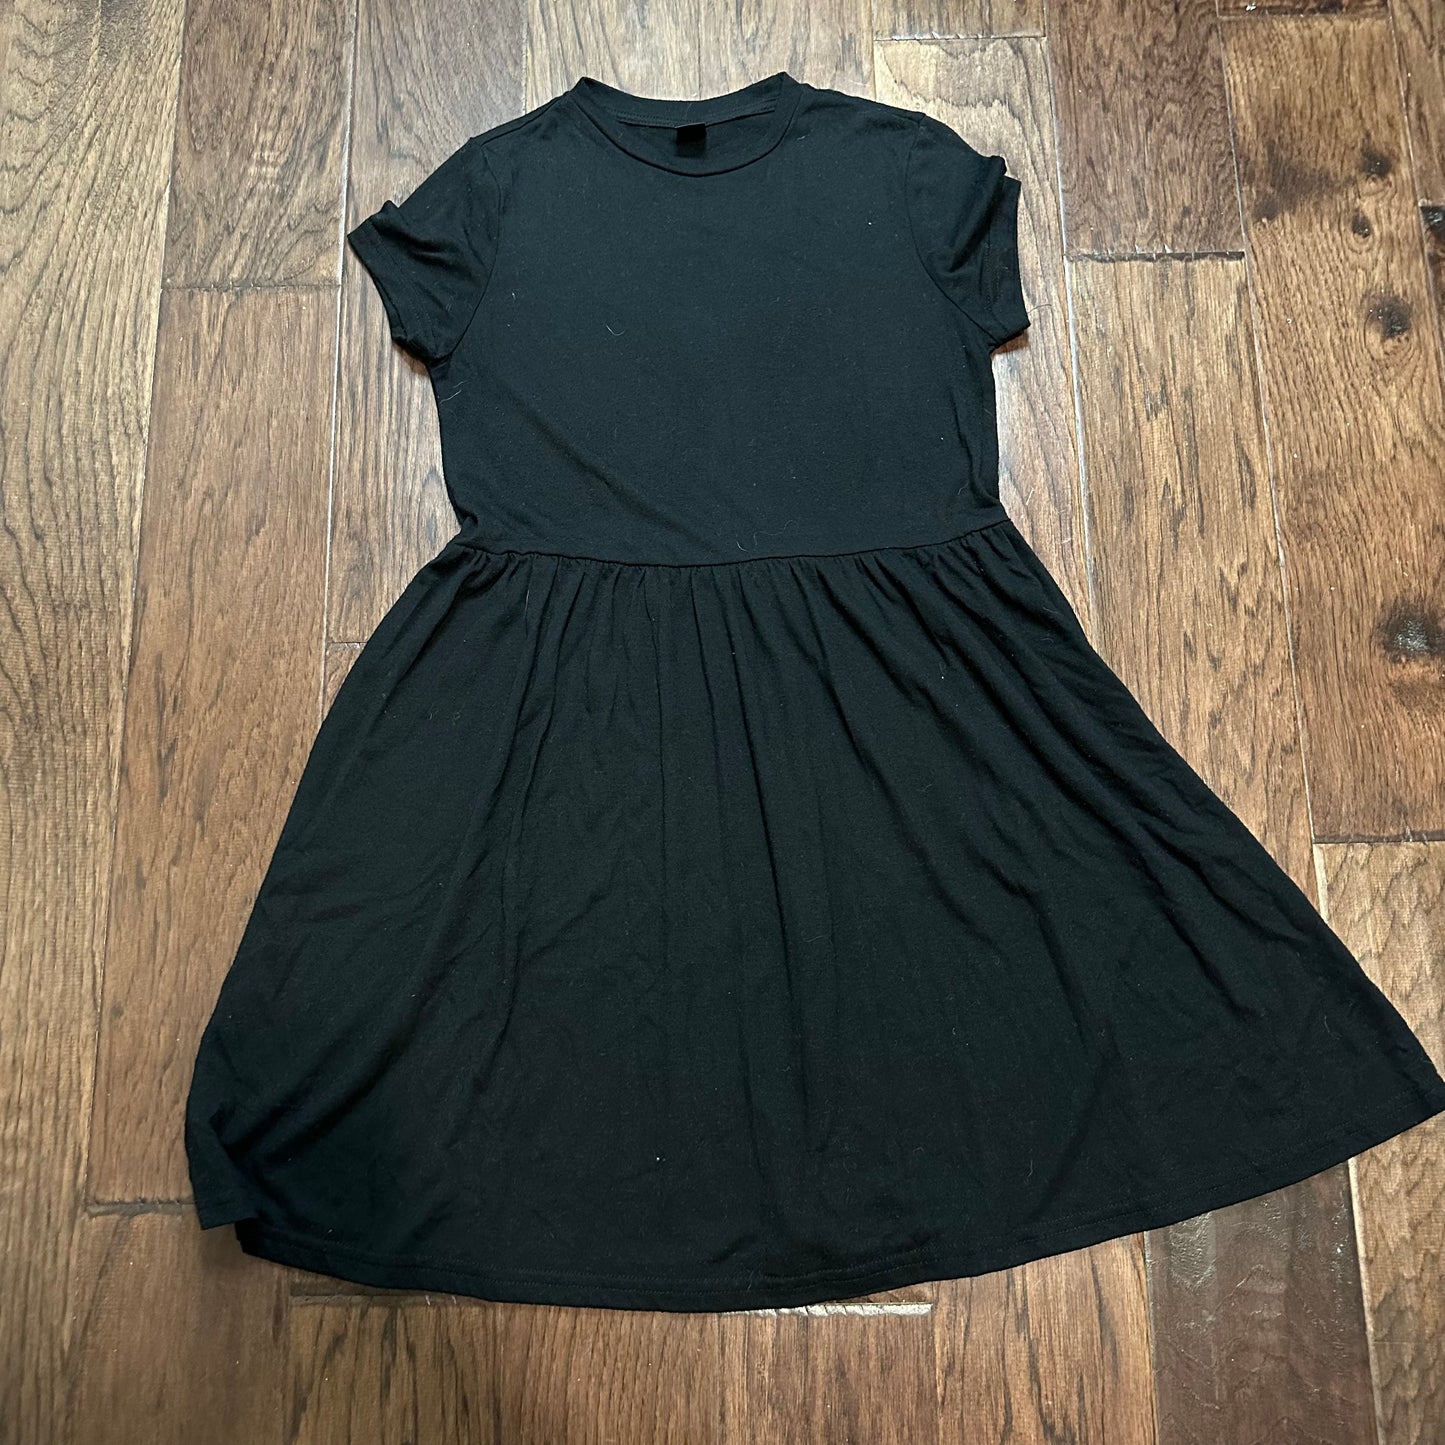 SHEIN Black Dress - Small